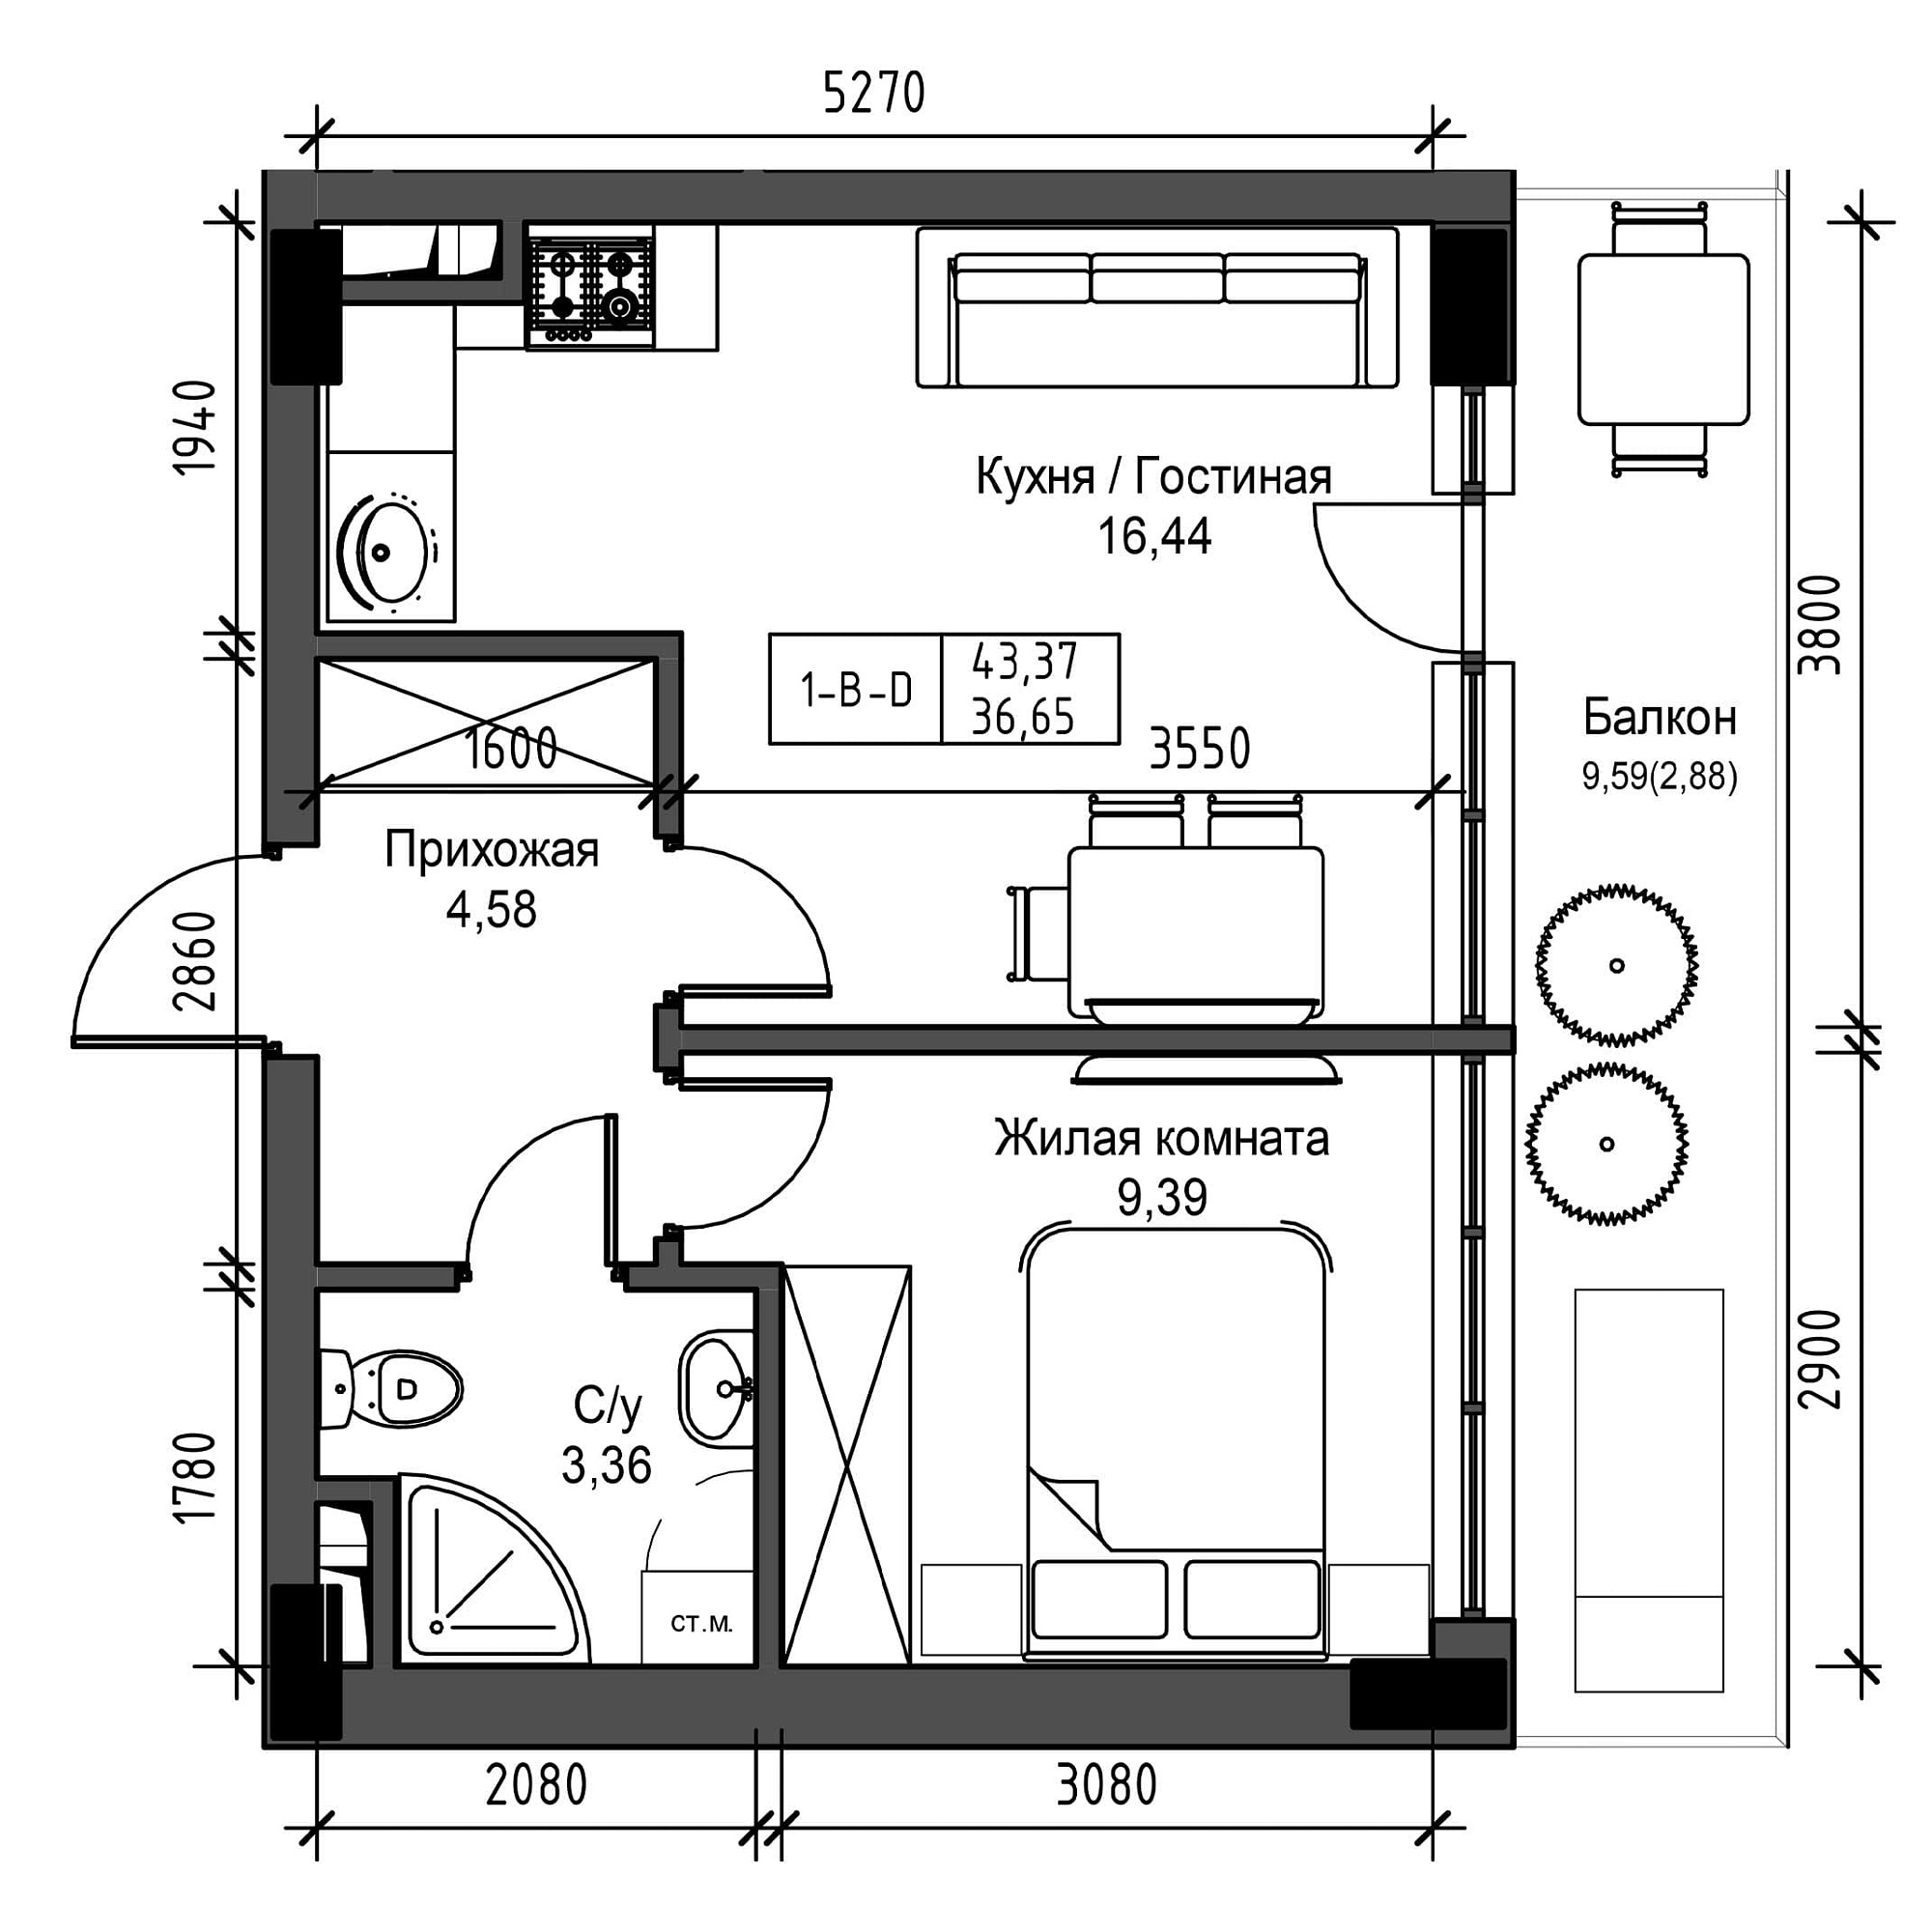 Планування 1-к квартира площею 36.65м2, UM-001-08/0002.